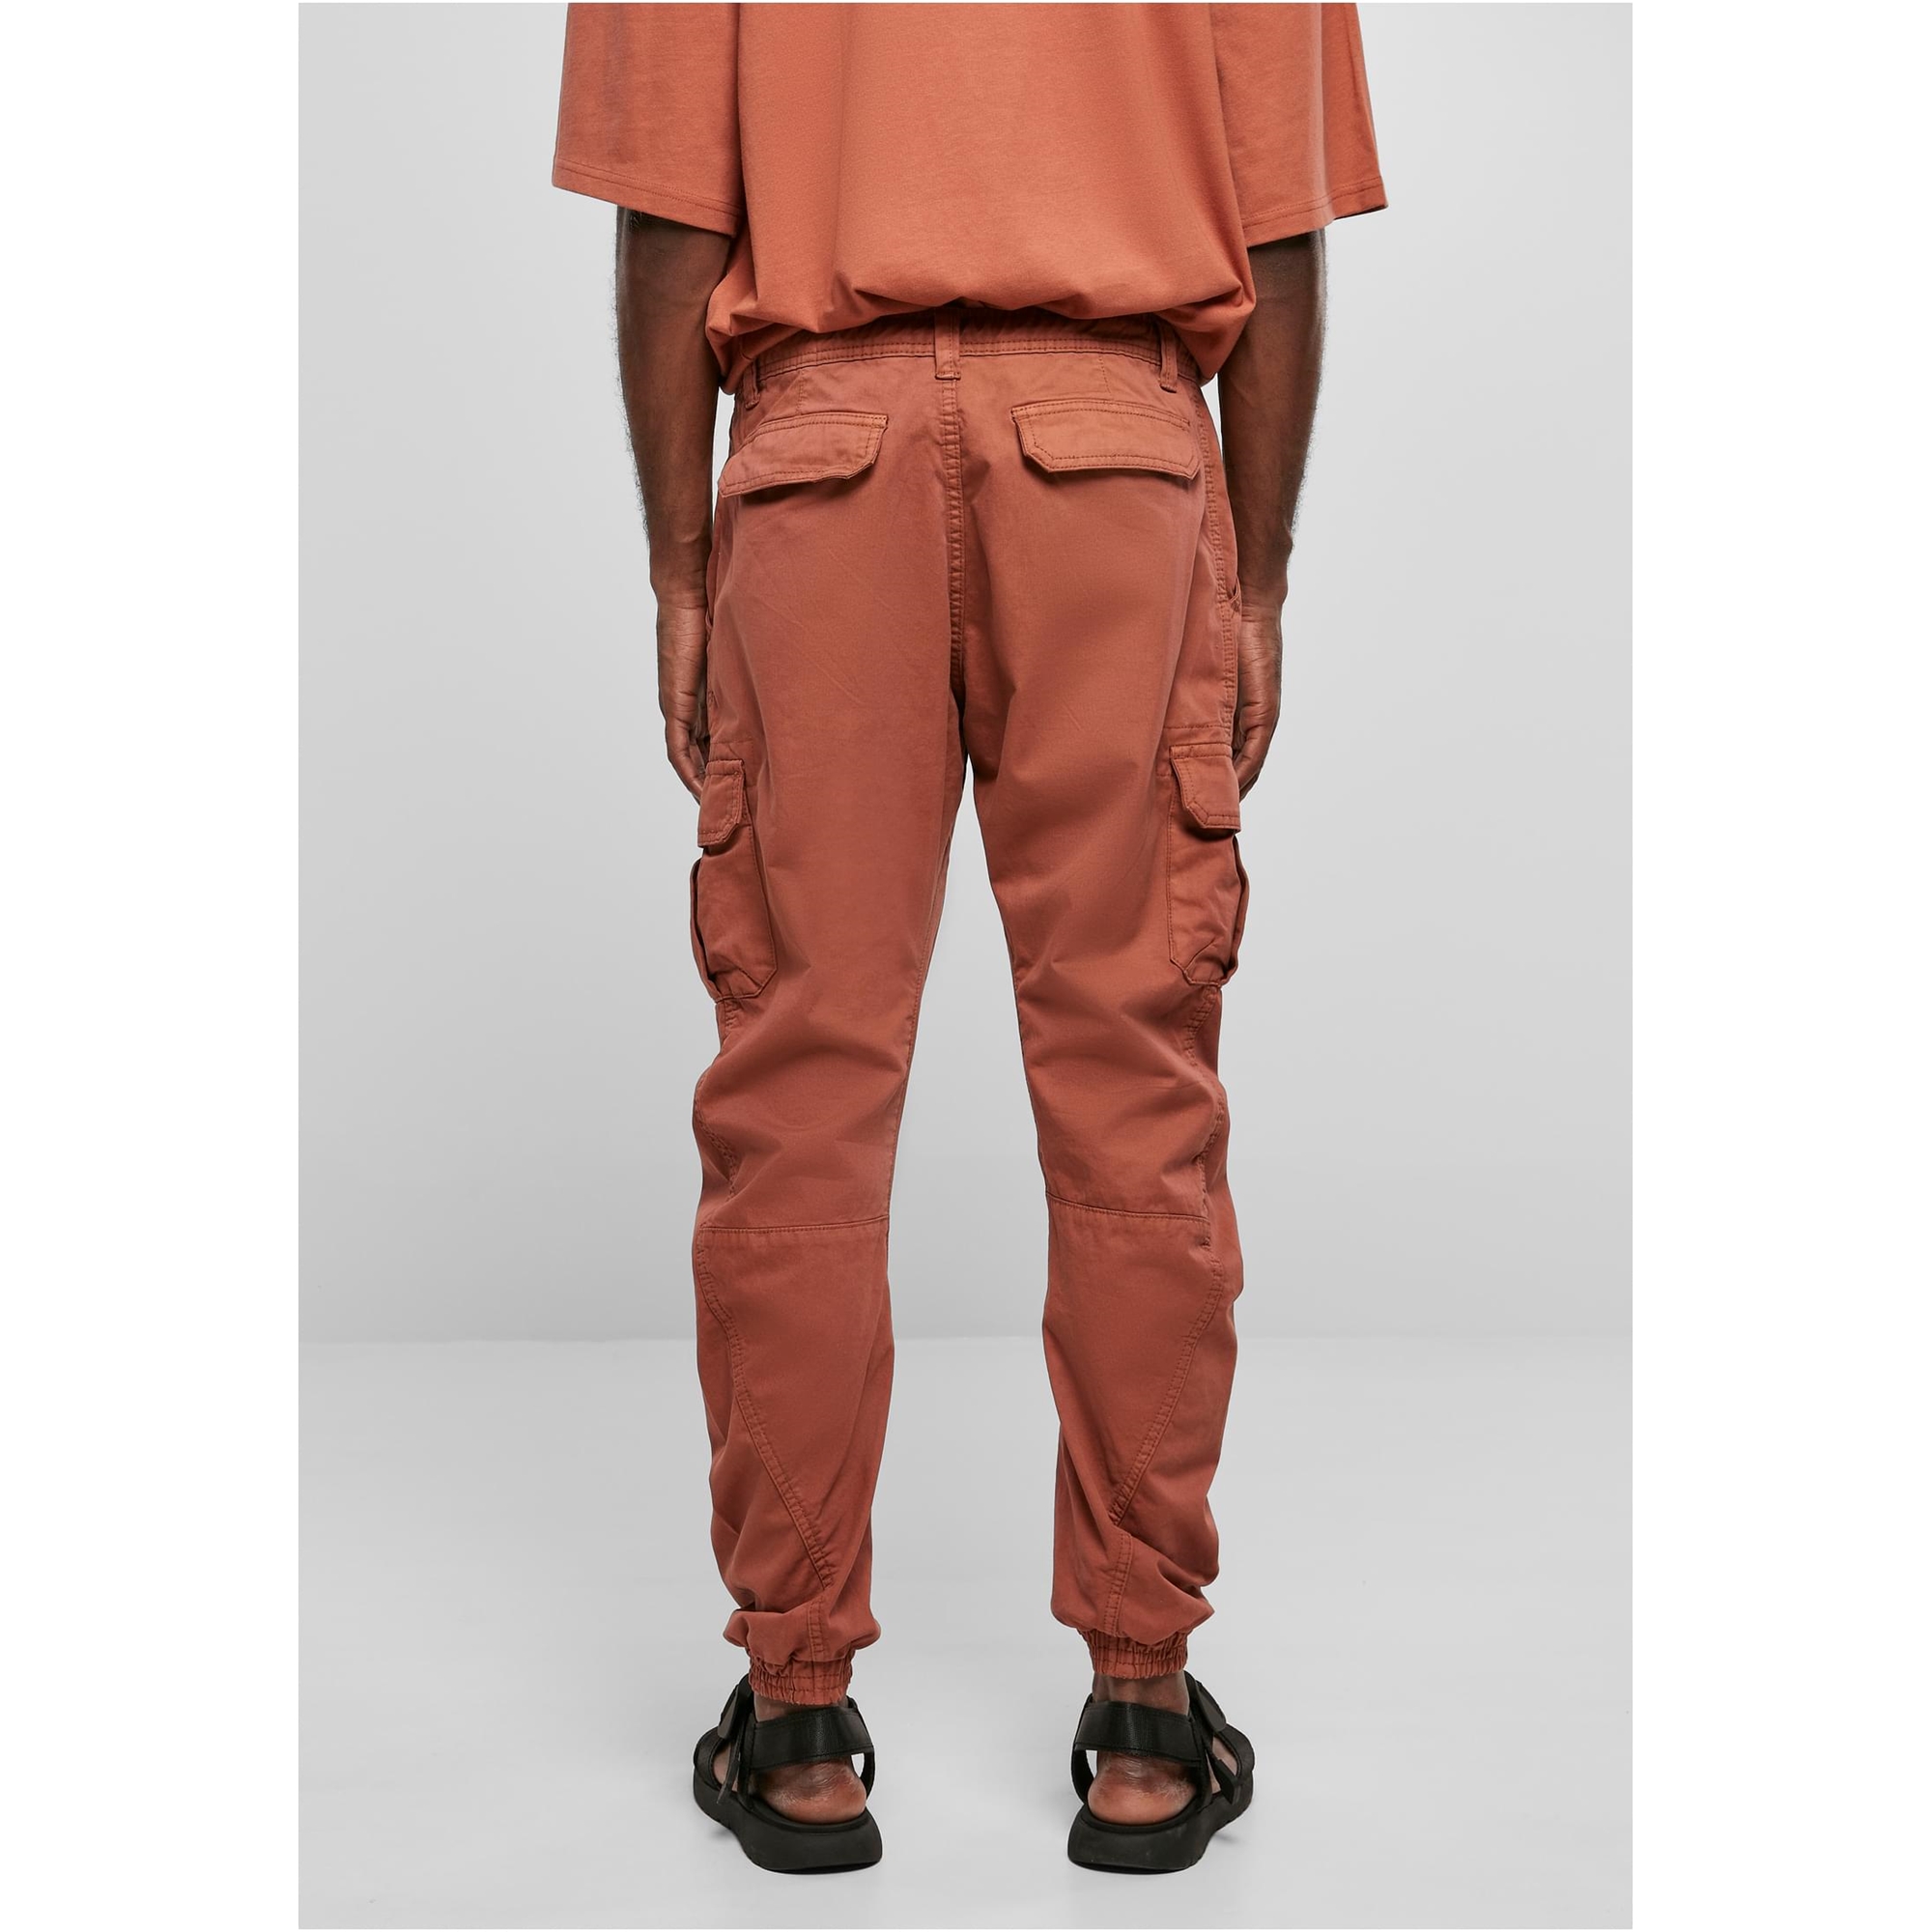 Urban Classics Herren Cargo Hose | eBay Chino Cargohose Jeans Jogginghose Sweatpant